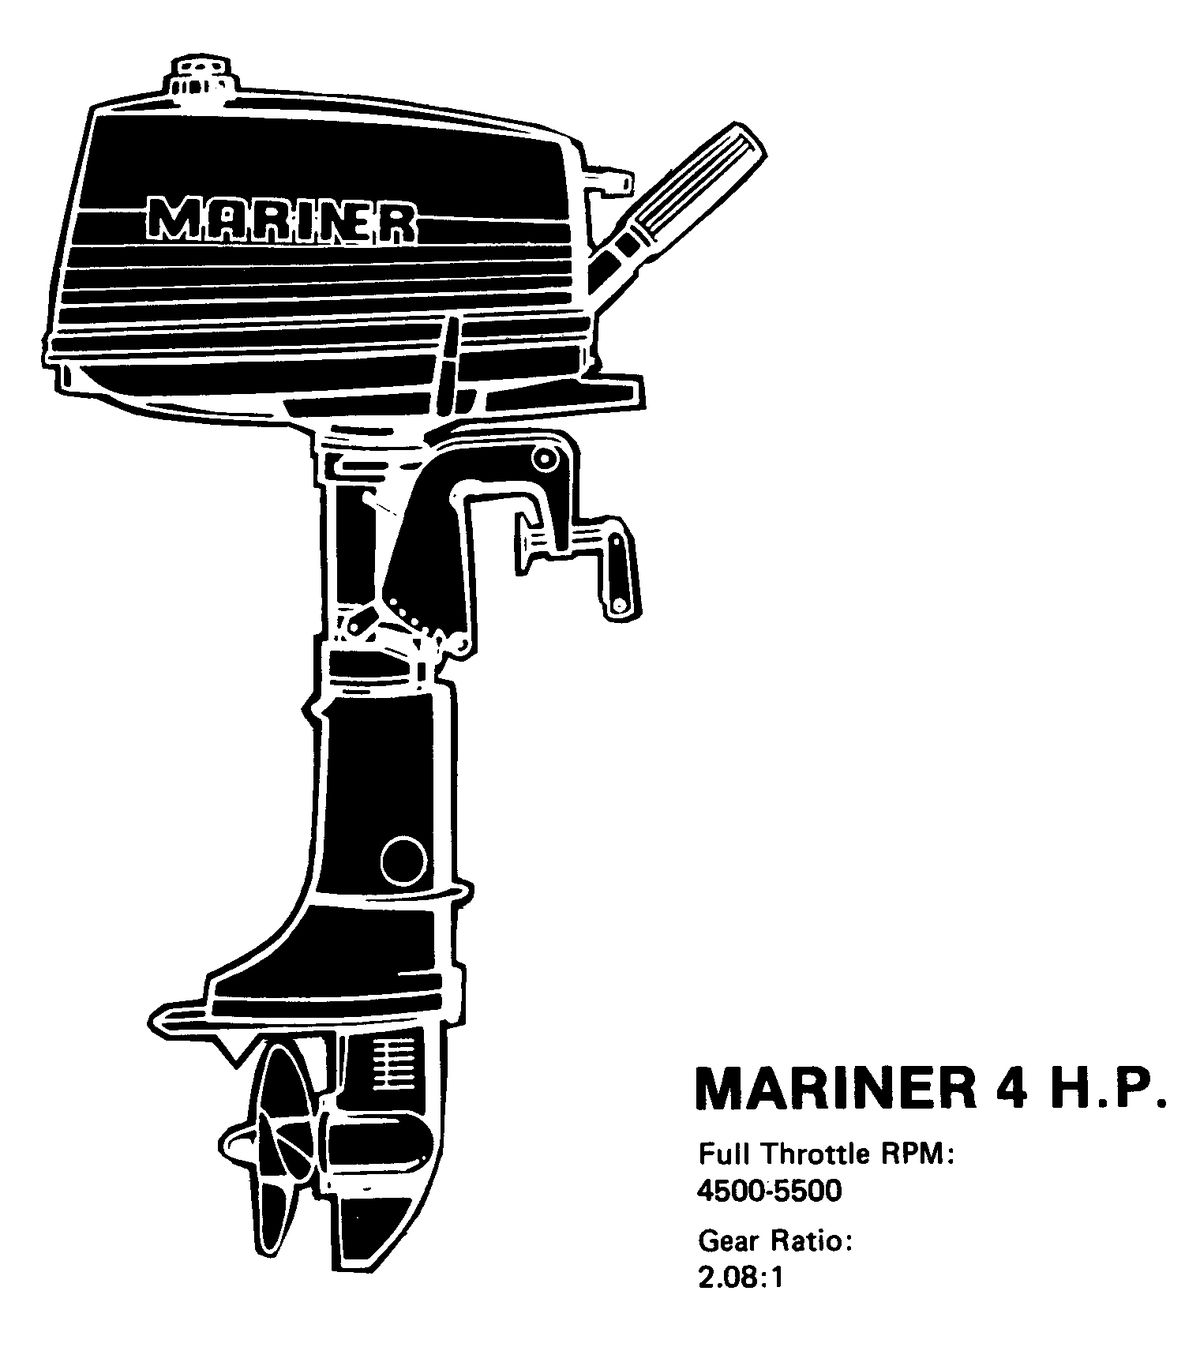 MARINER 4 H.P. PROP CHART